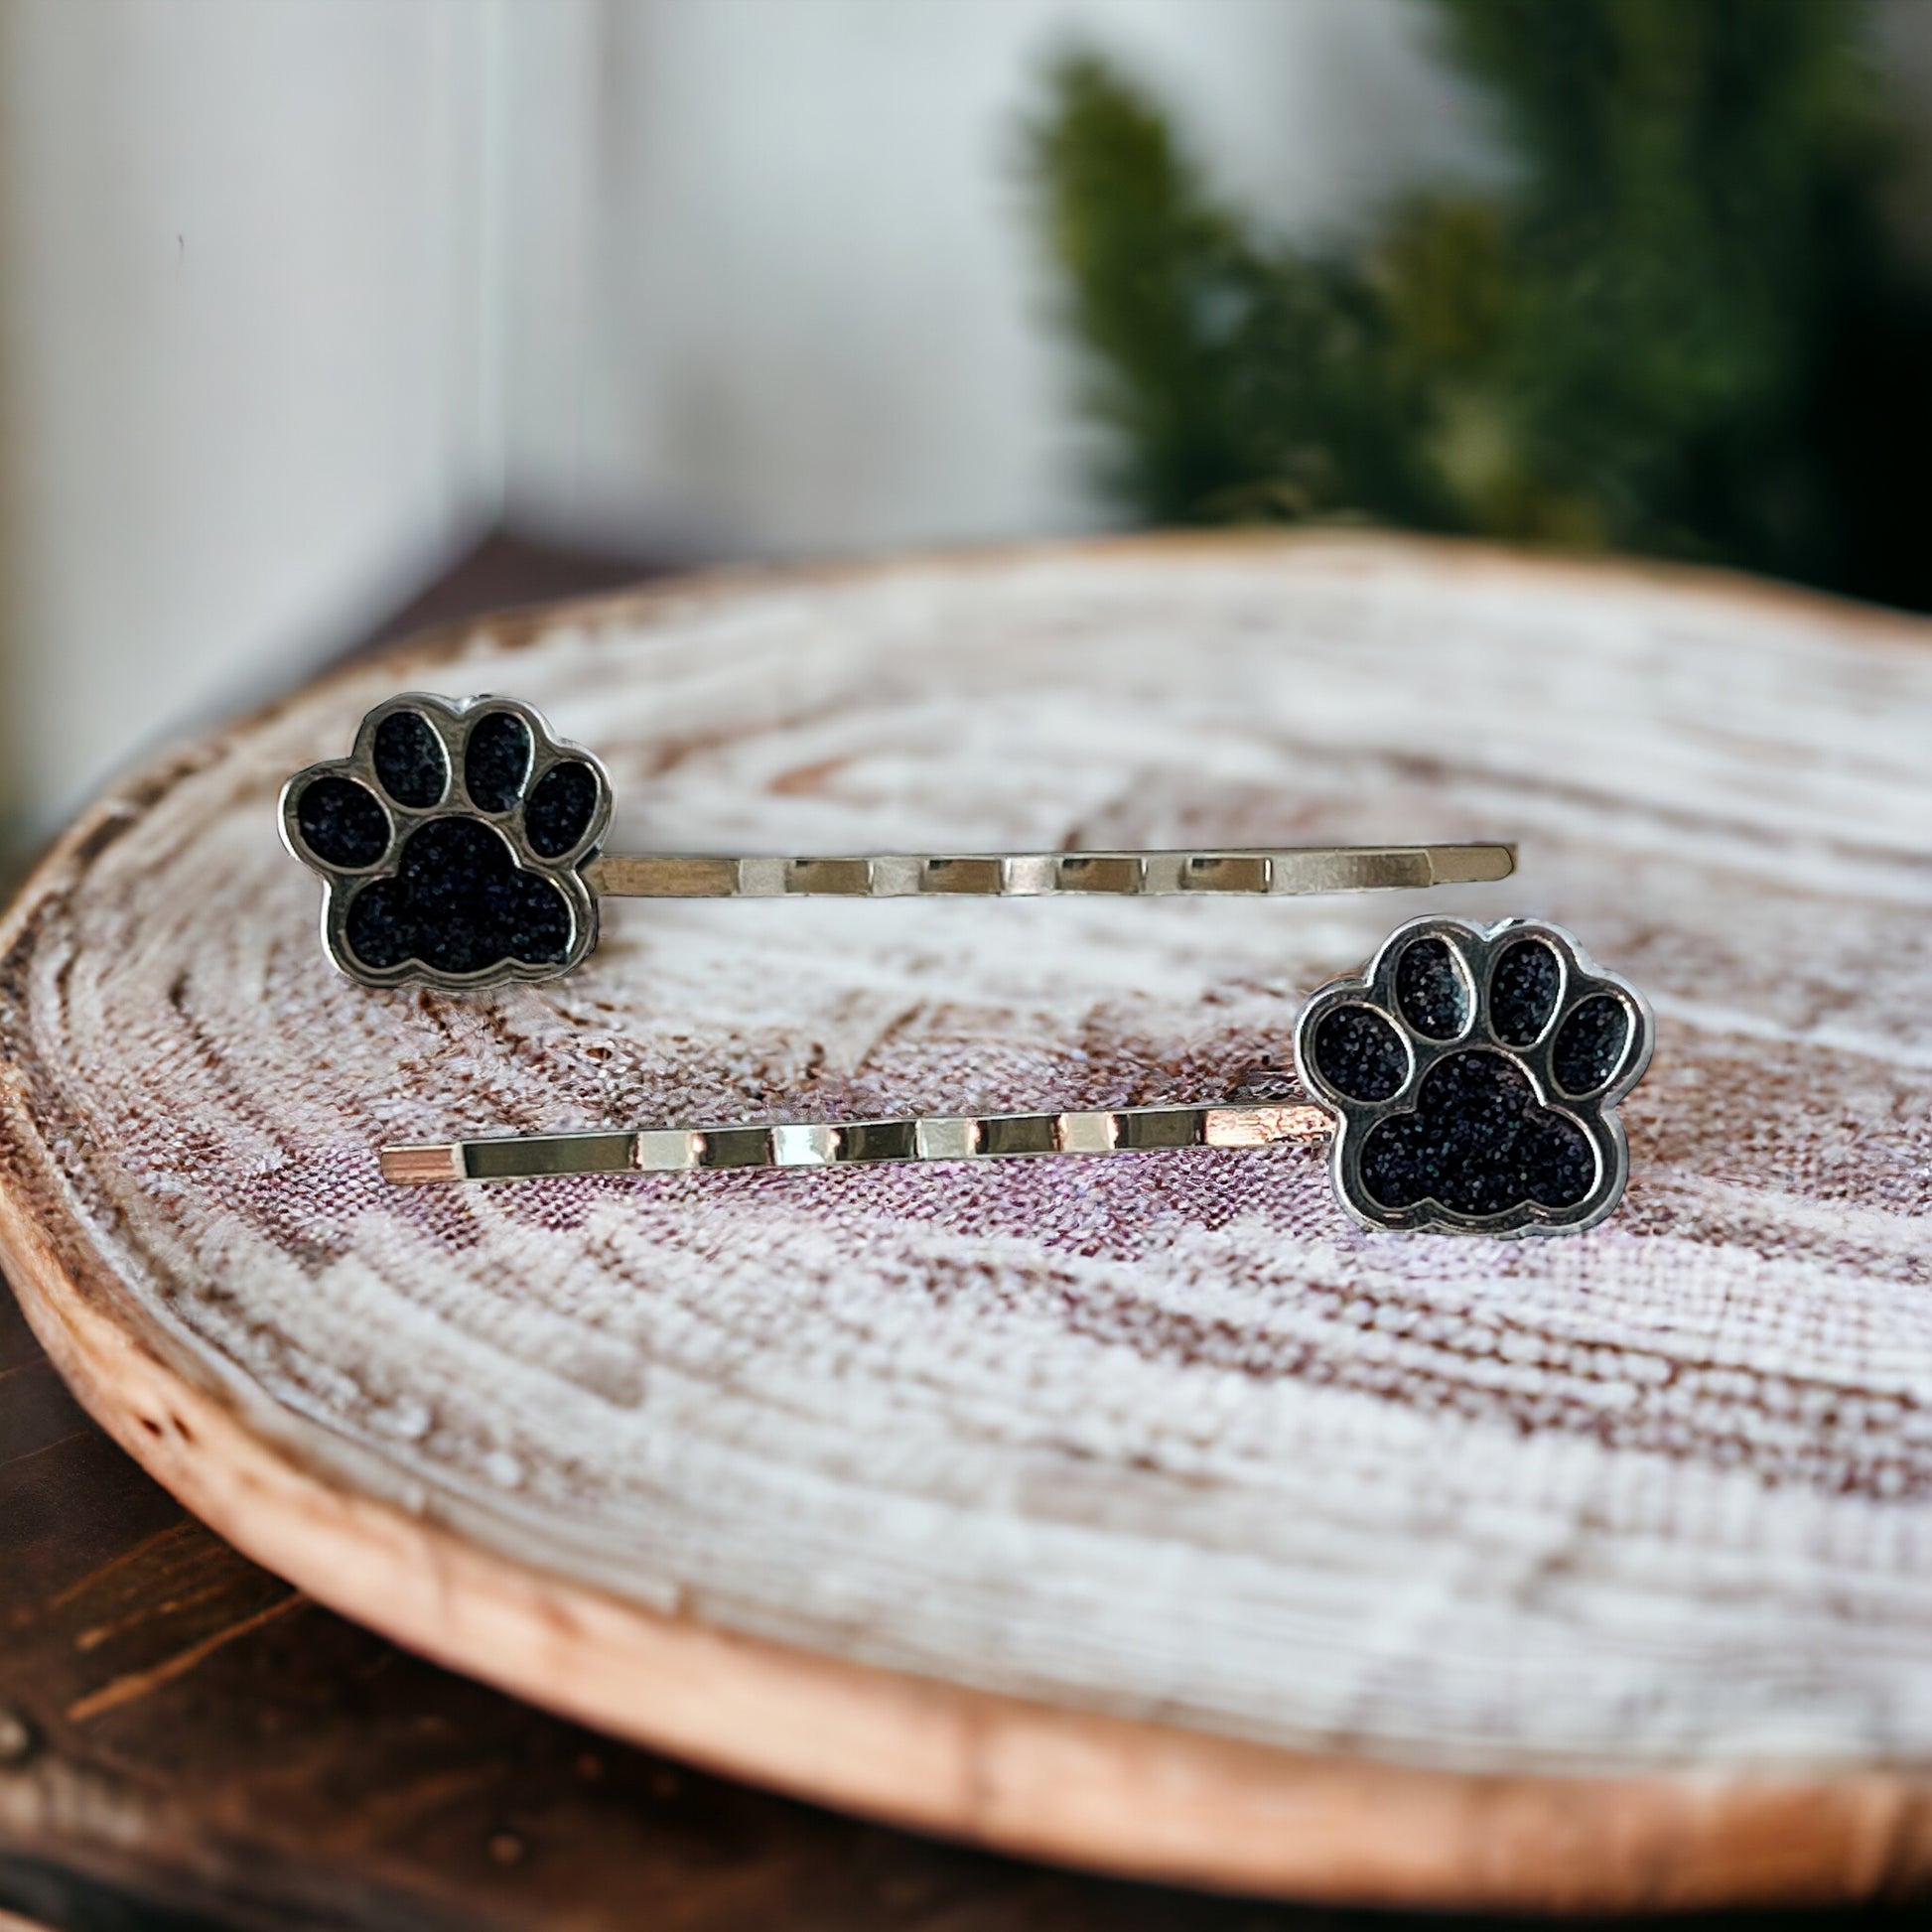 Black Glitter Paw Print Hair Pins - Playful & Stylish Animal-Inspired Accessories